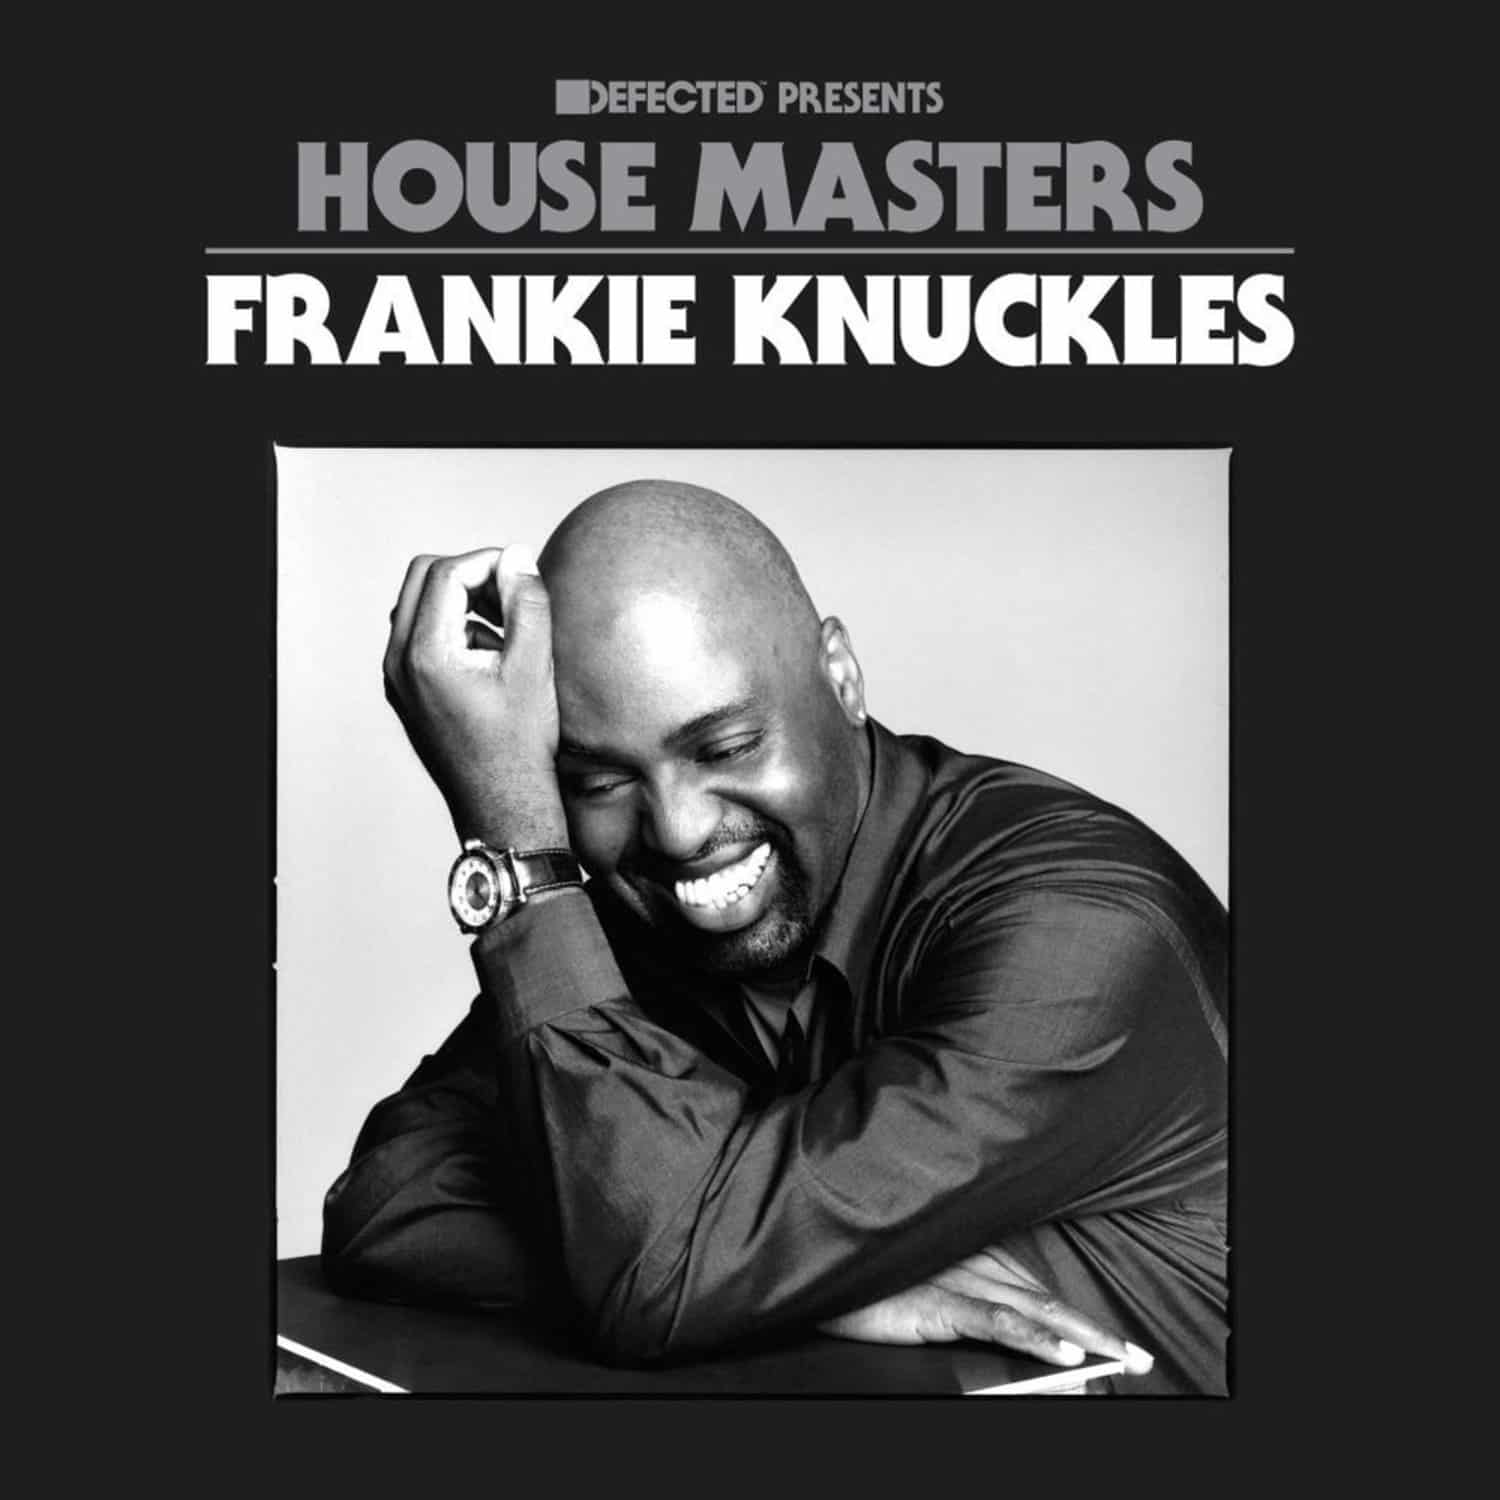 Frankie Knuckles, Various Artists - DEFECTED PRESENTS HOUSE MASTERS - FRANKIE KNUCKLES - VOLUME ONE 